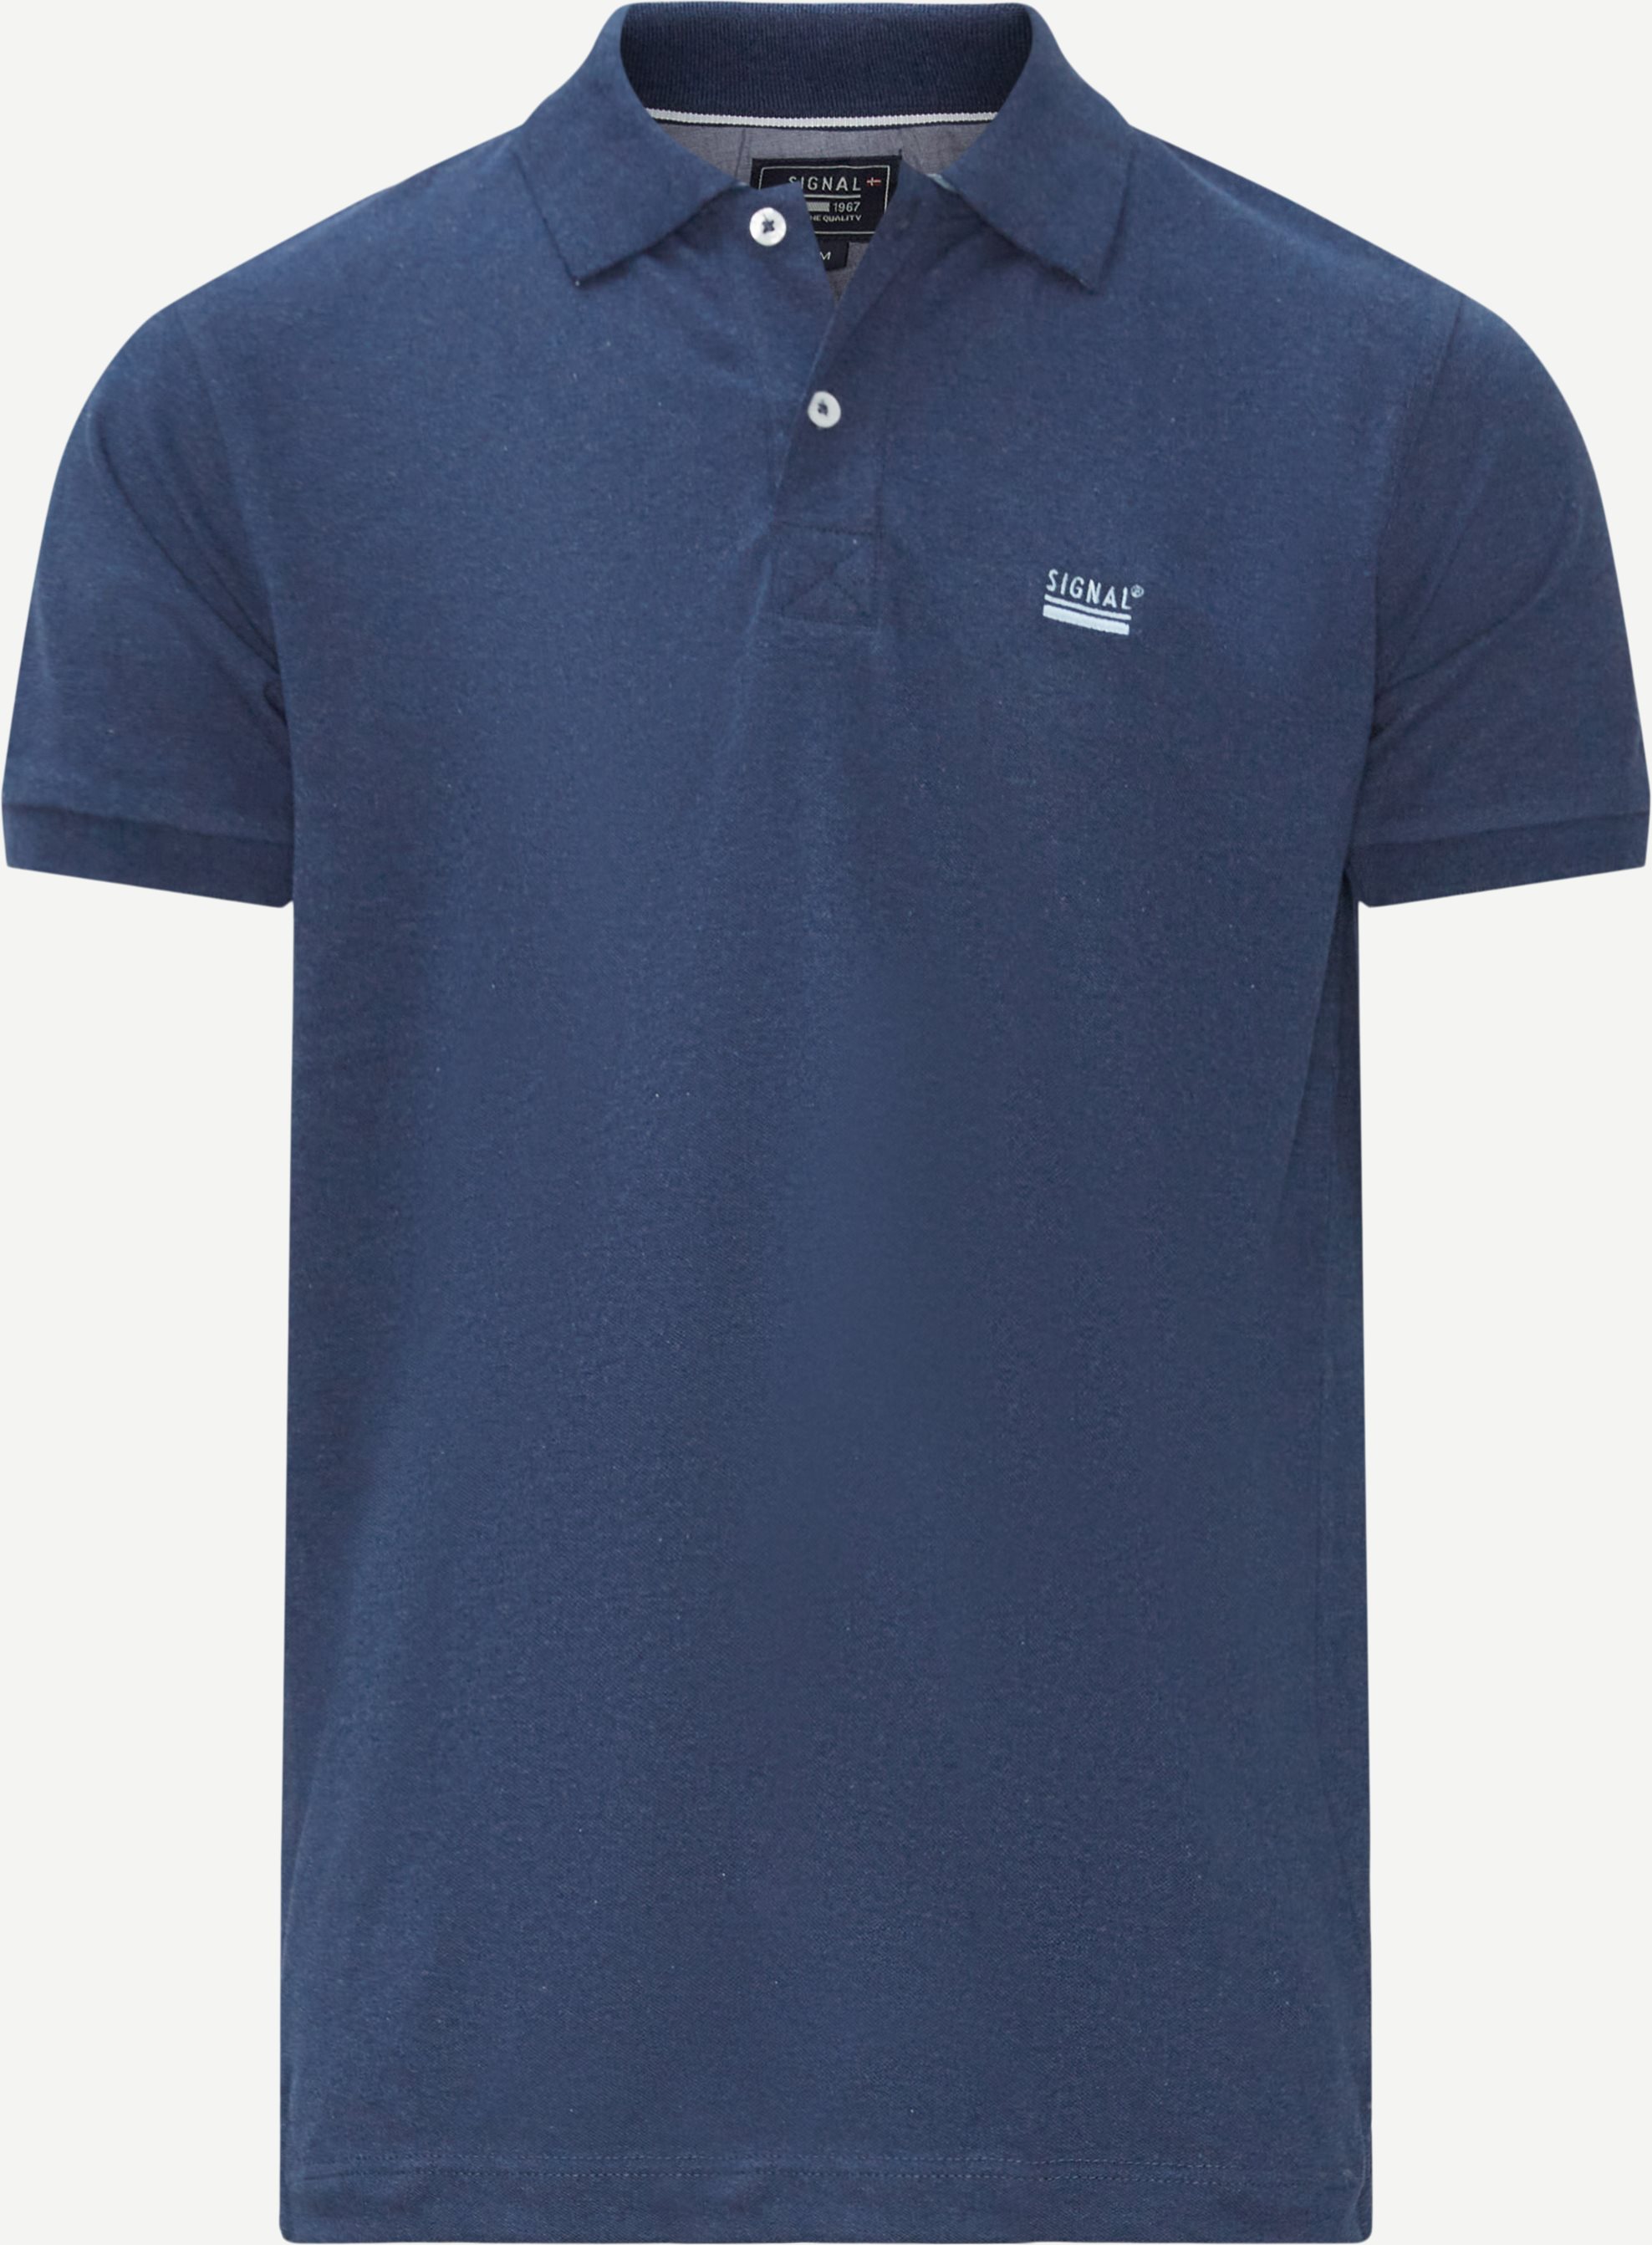 T-shirts - Regular fit - Blue